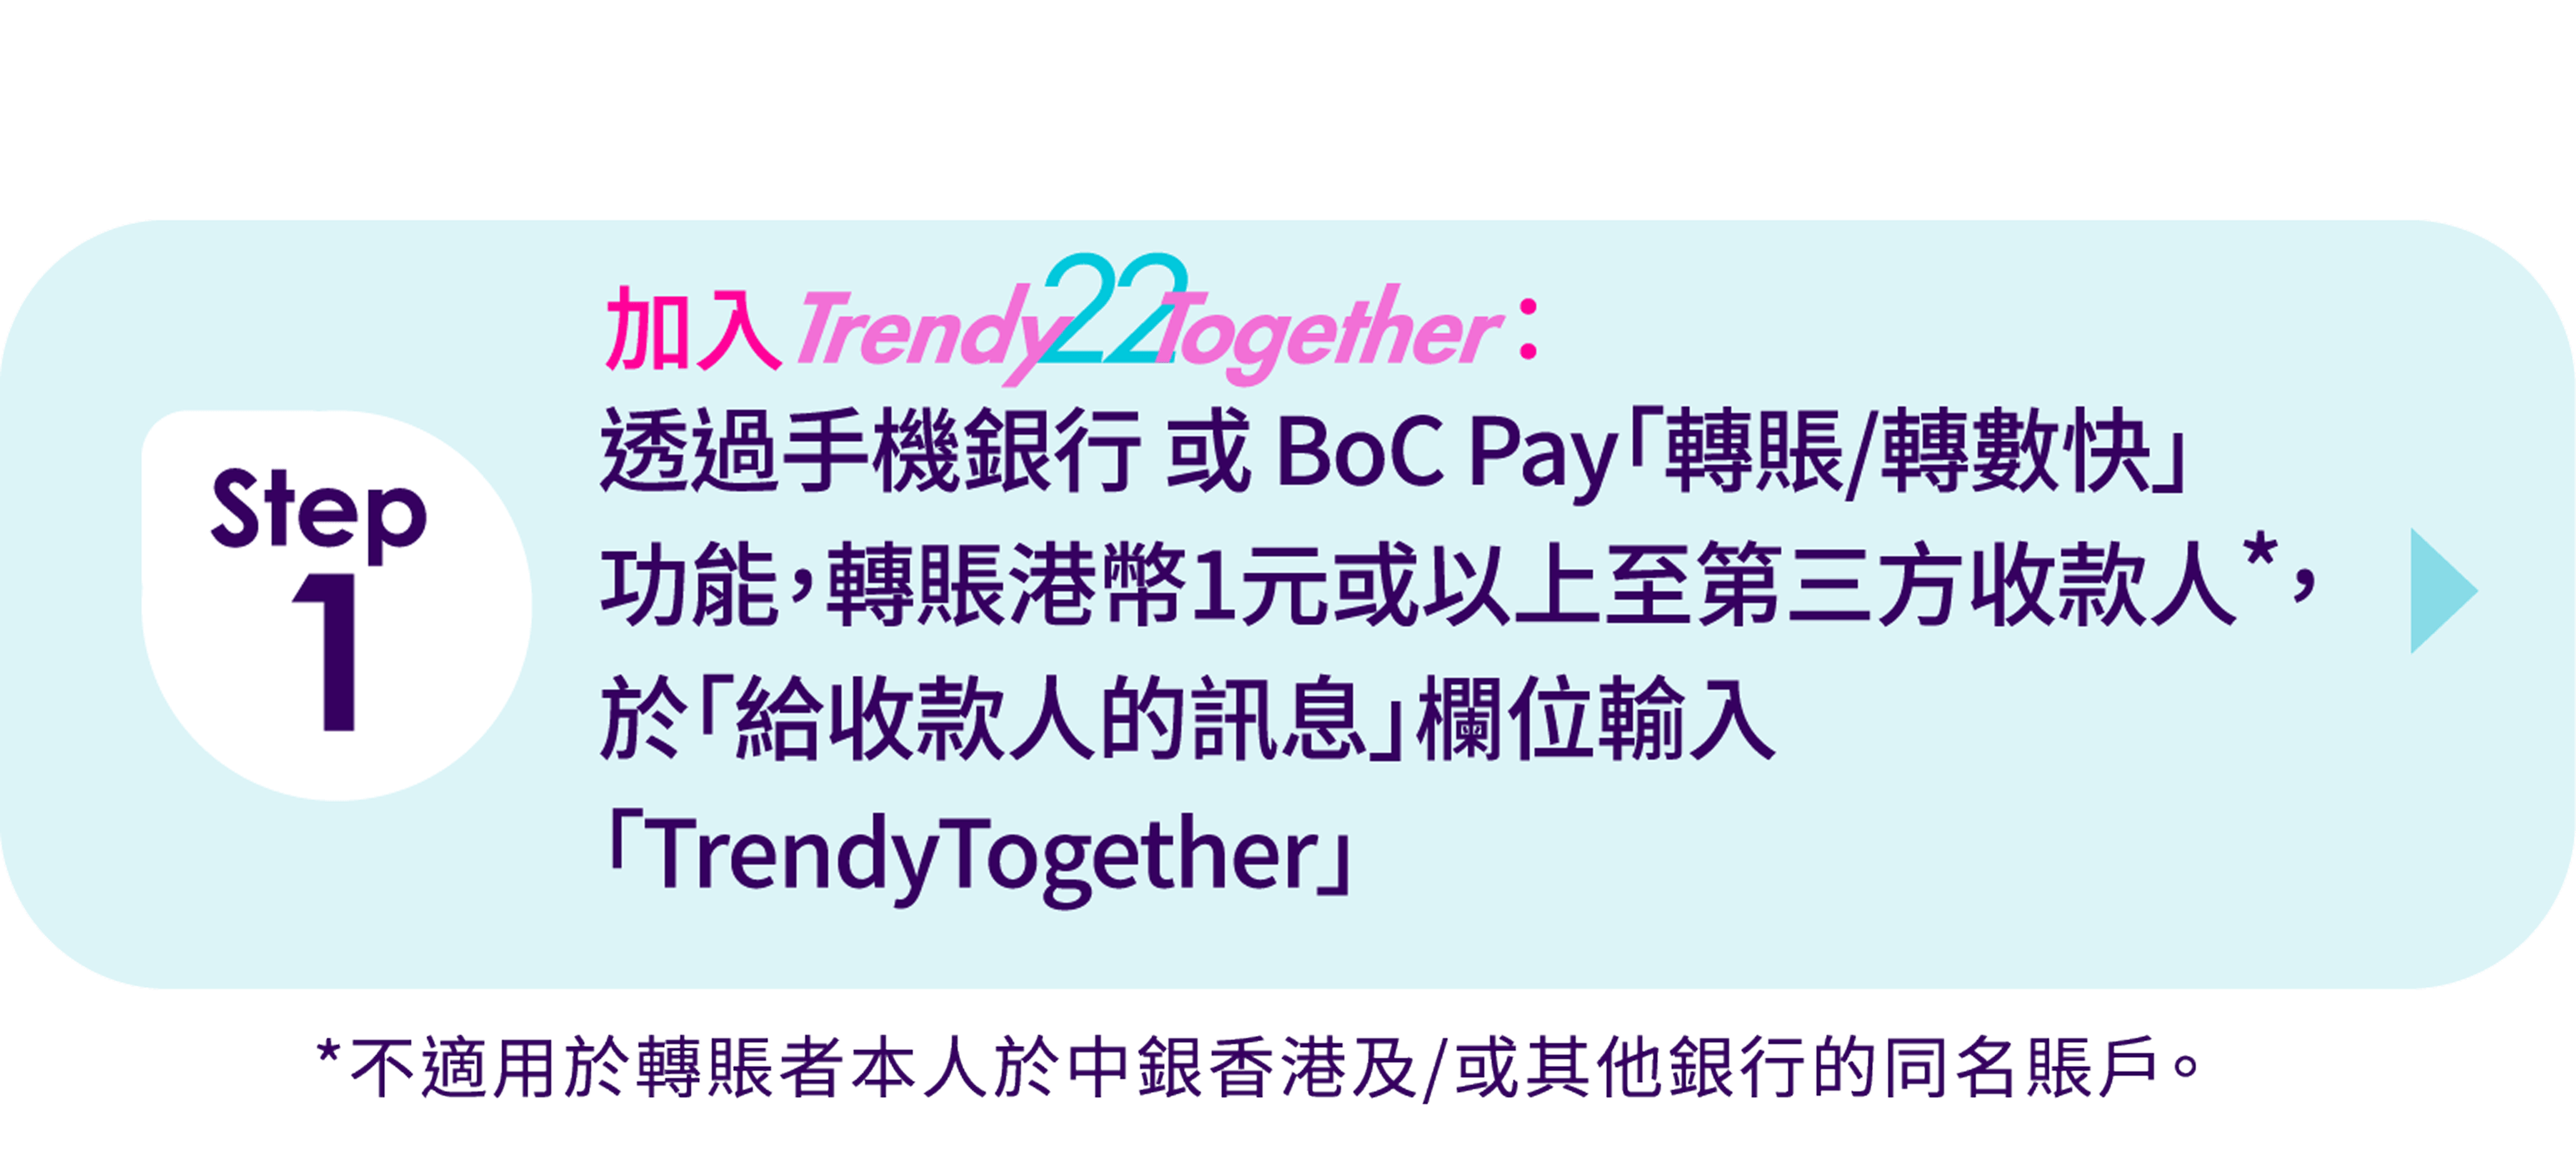 Step 1) 加入TrendyTogether:透過手機銀行或BoC Pay「轉賬/轉數快」功能，轉賬港幣1元或以上至第三方收款人*，於「給收件人的訊息」欄位輸入「TrendyTogether」 *不適用於轉賬者本人於中銀香港及/或其他銀行的同名賬戶。